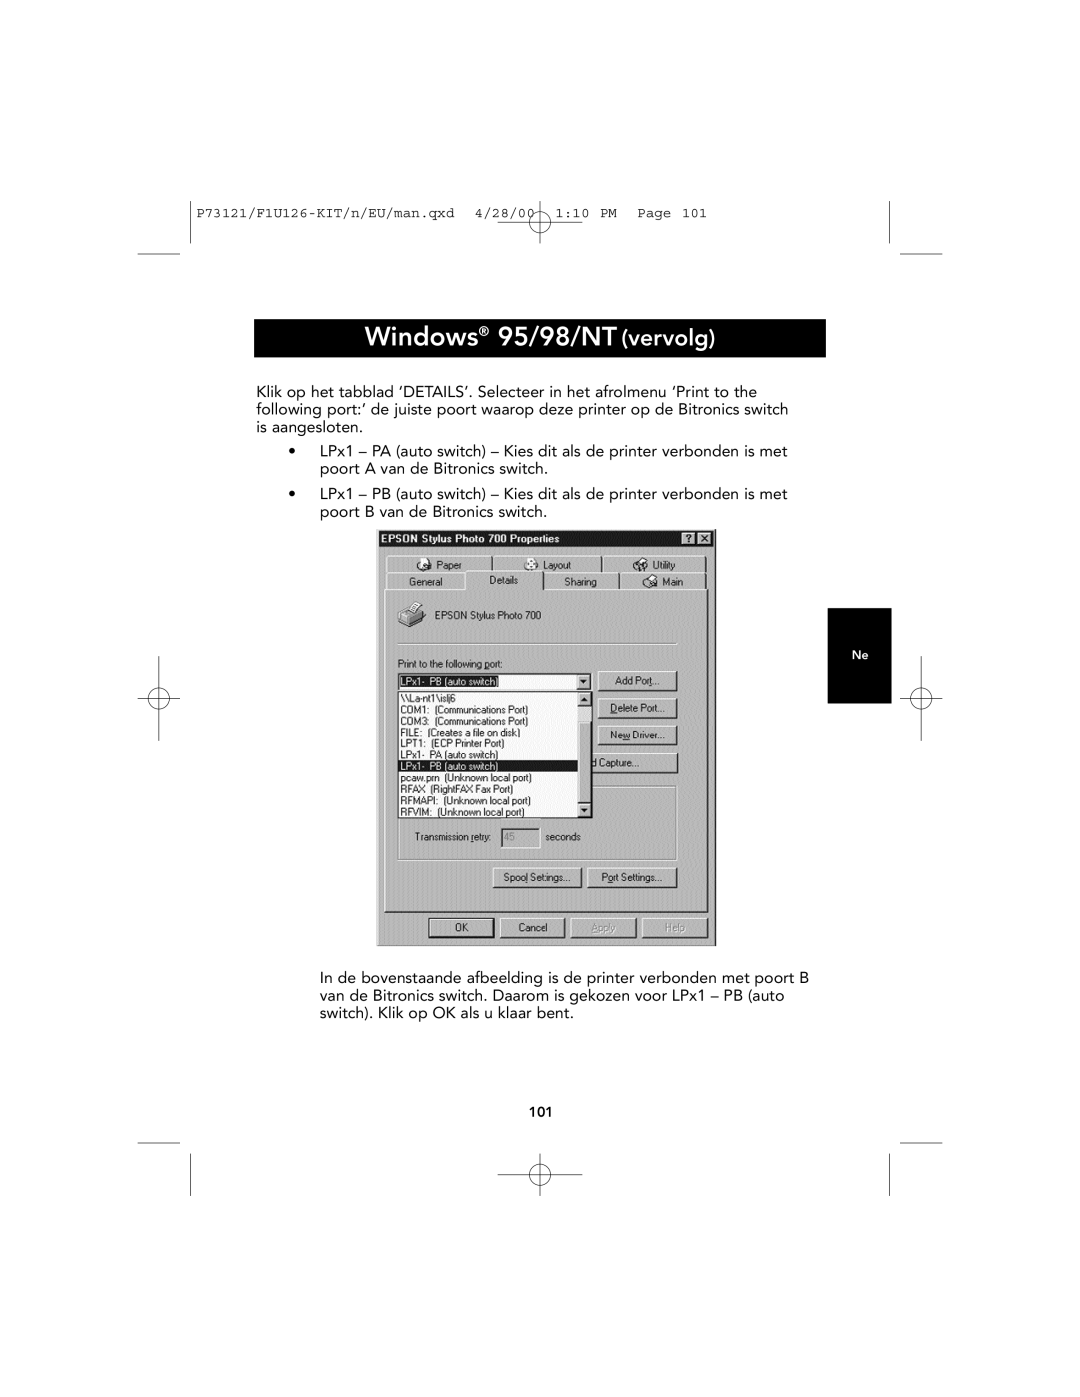 Belkin P73121, F1U126-KIT user manual Windows 95/98/NT vervolg 